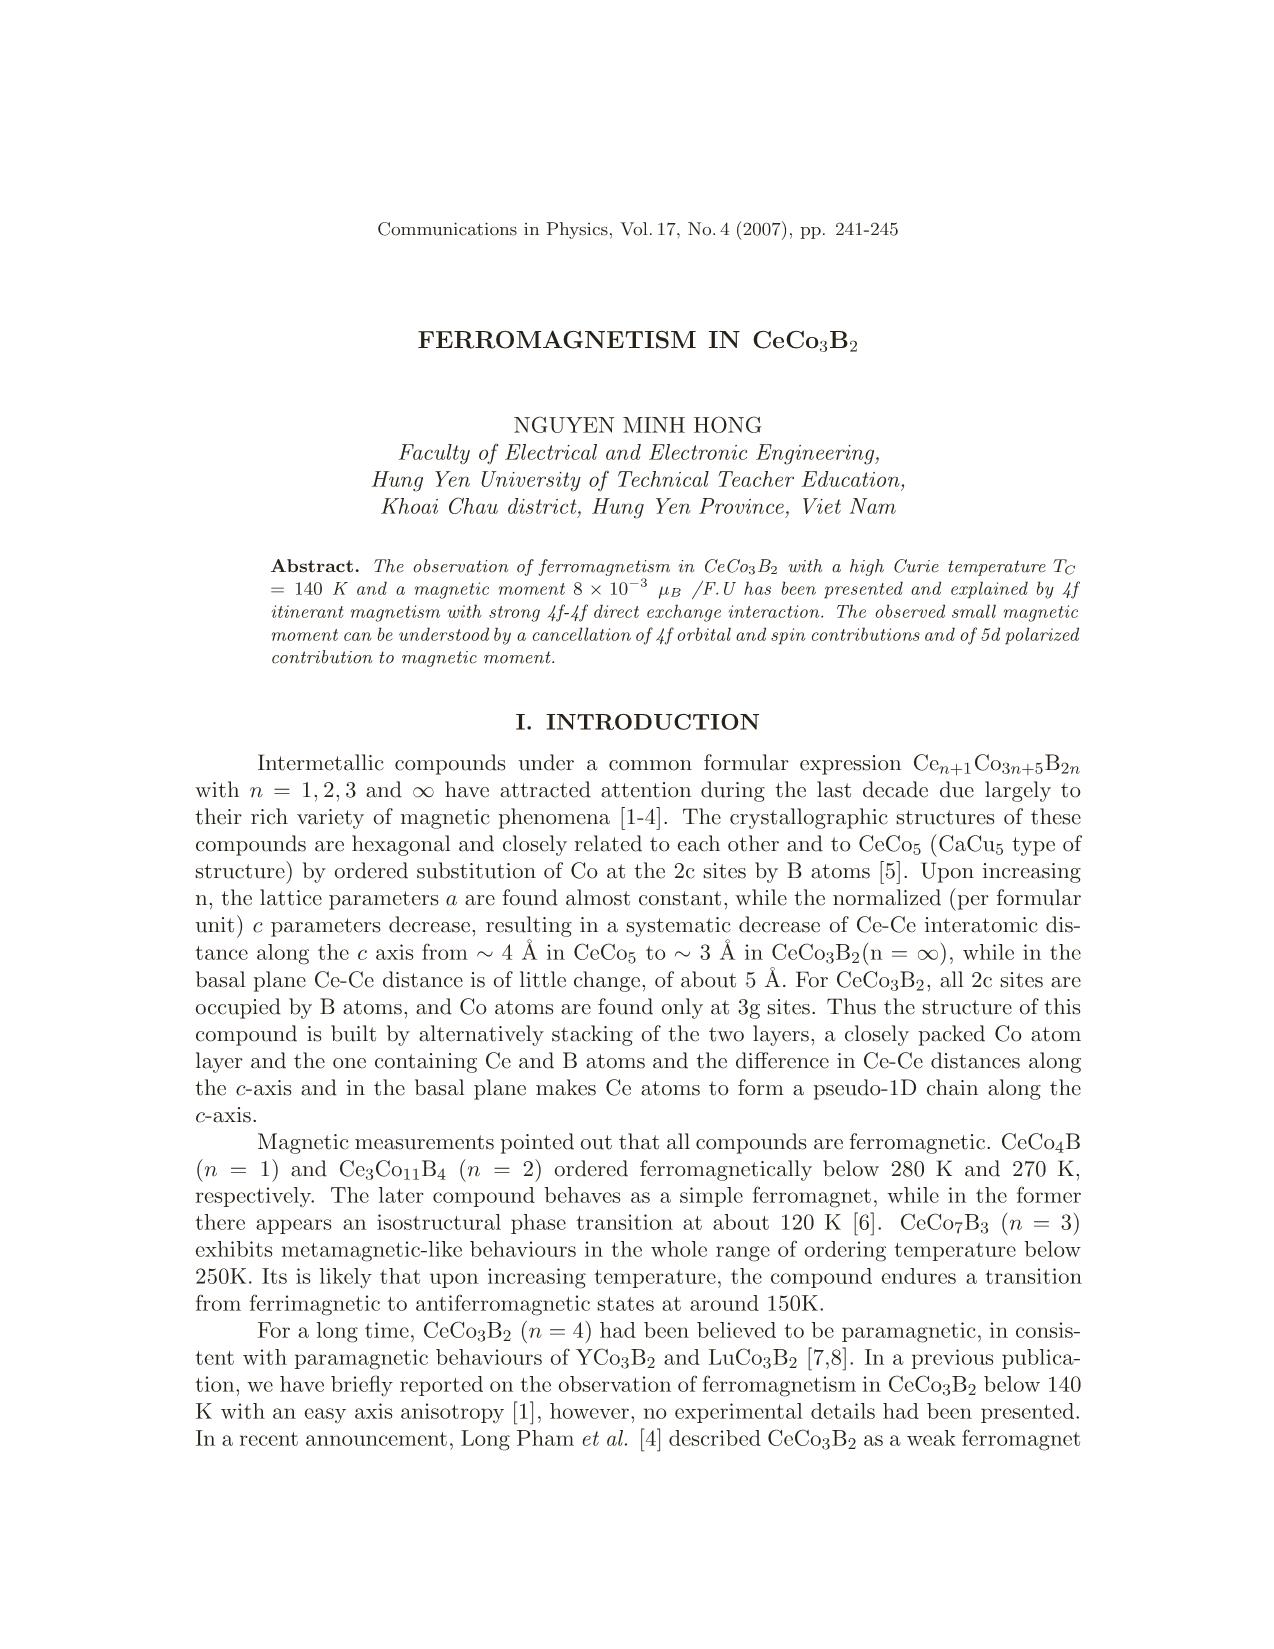 Ferromagnetism in CeCo3B2 trang 1